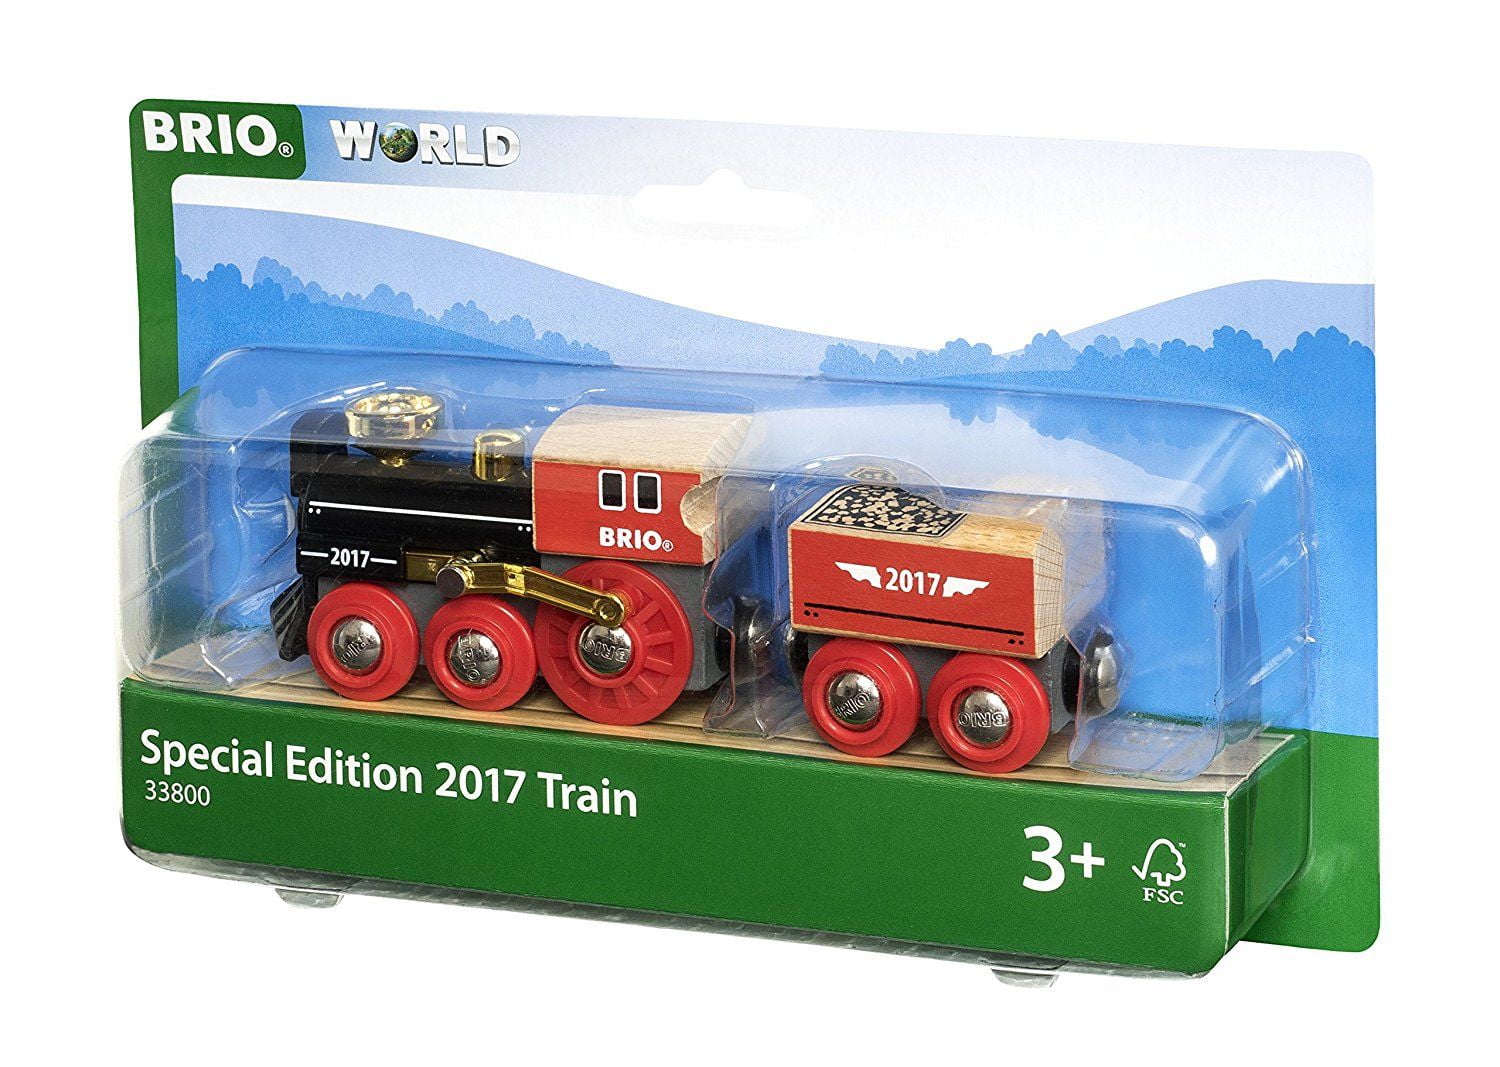 Special Edition Train 2017 - Brio World. 